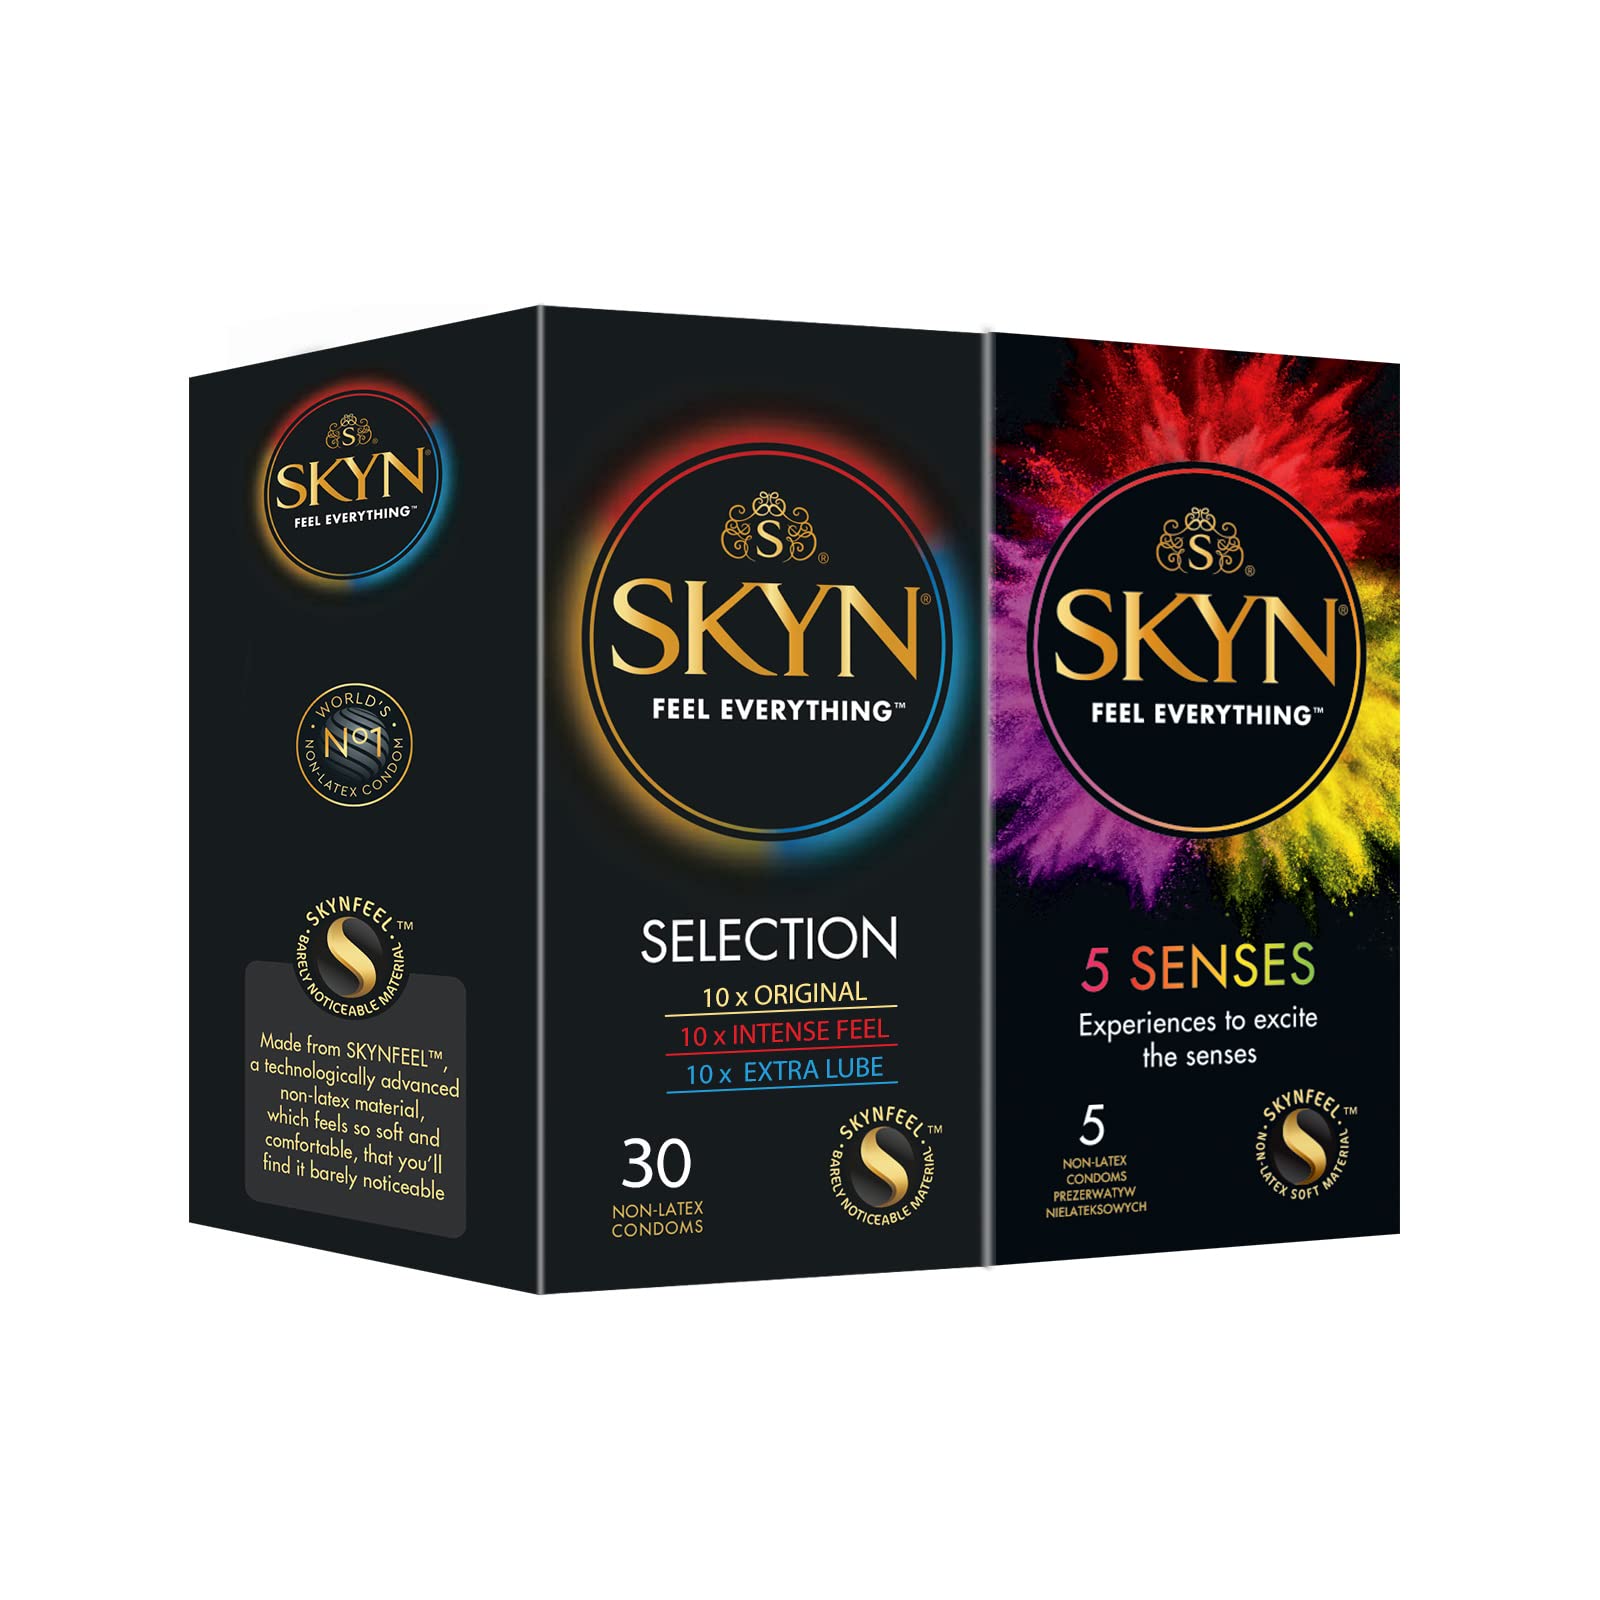 SKYN Selection Sortenbox Set Kondome (30 Stück) & 5 Senses Kondome (5 Stück) | Vielfalt Packet mit 10 Original, 10 Intense Feel & 10 Extra Lube Kondome, Gefühlsecht Skynfeel